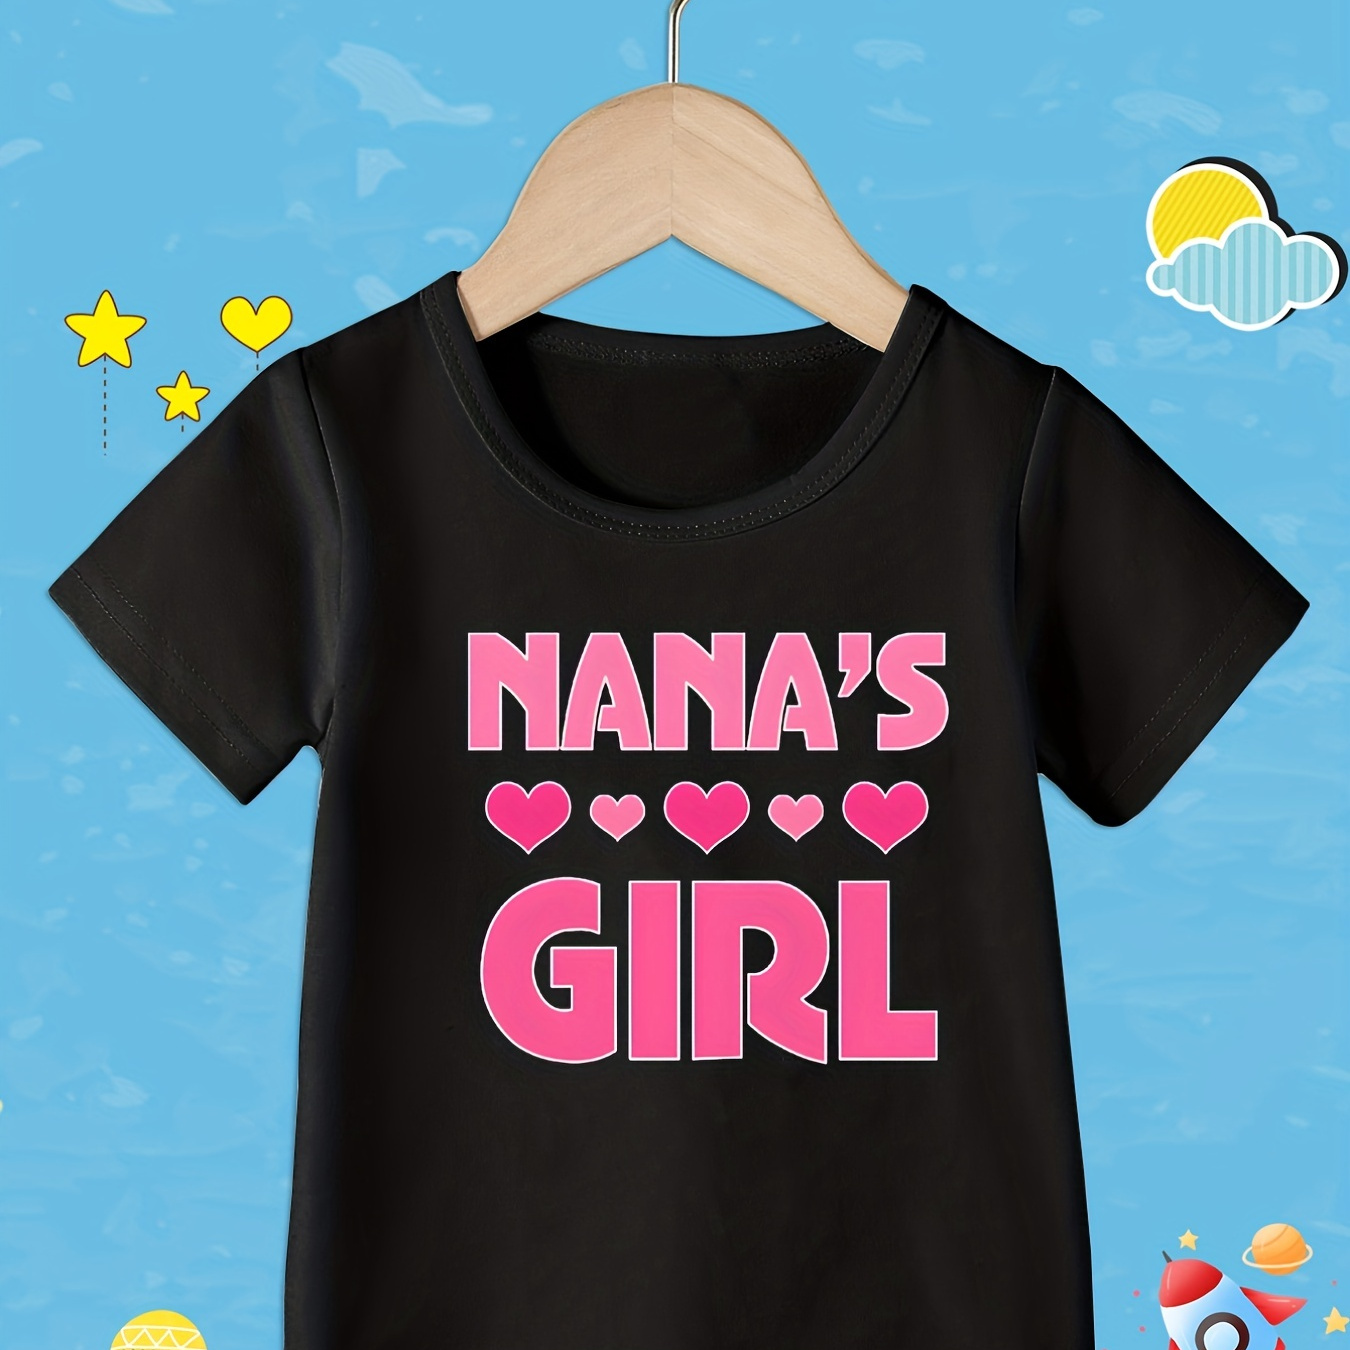 

Nana's Girl Print Kids T-shirt - Soft And Comfortable Short Sleeve Tee For Girls